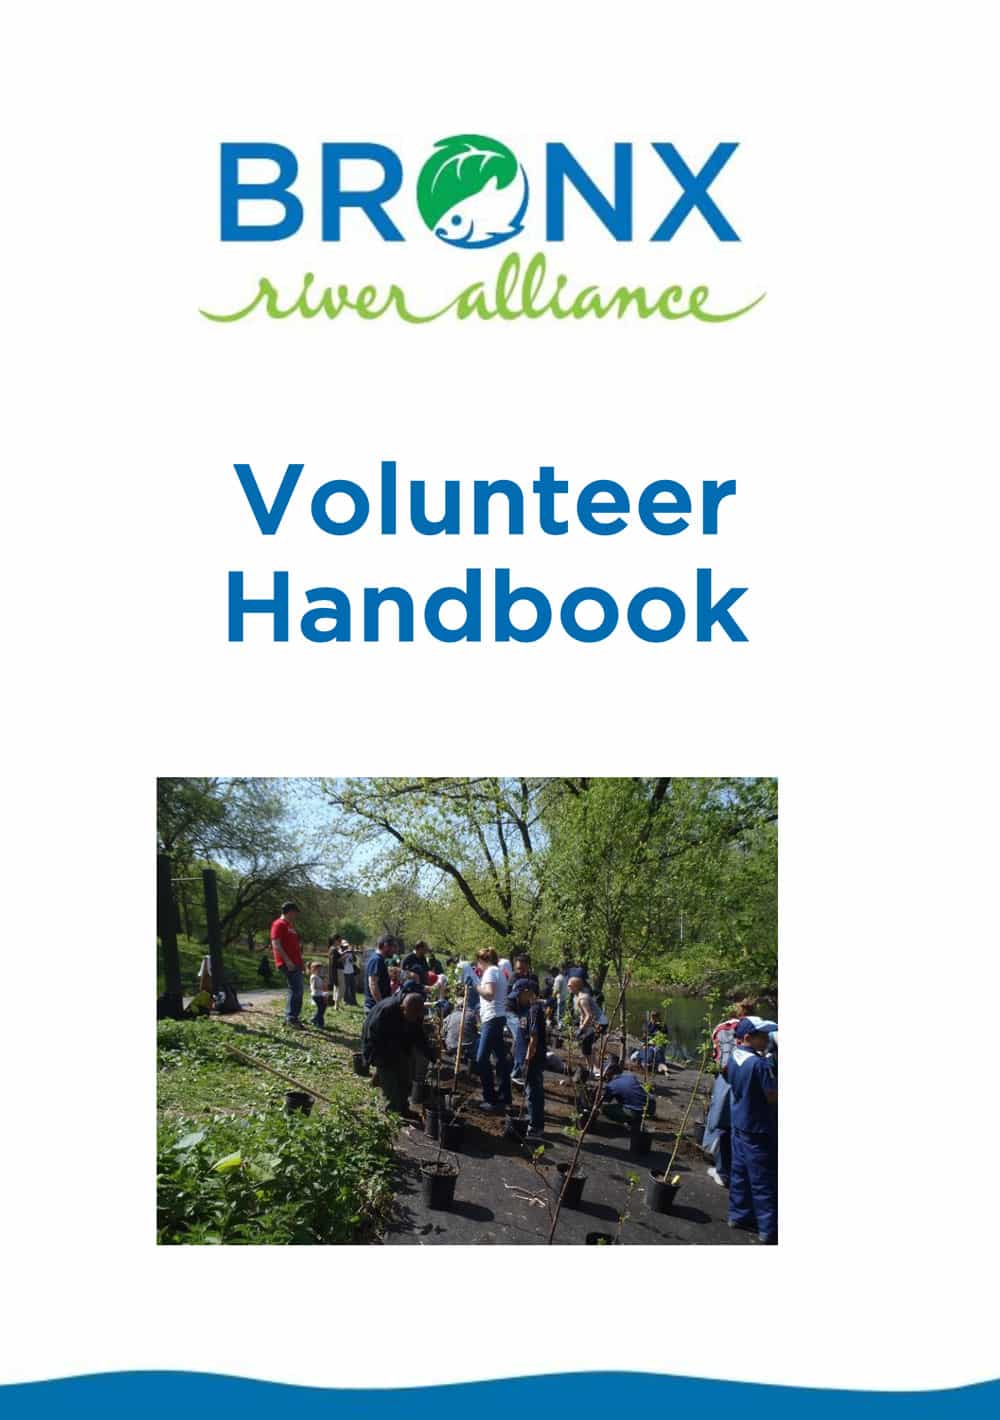 Volunteering Handbook